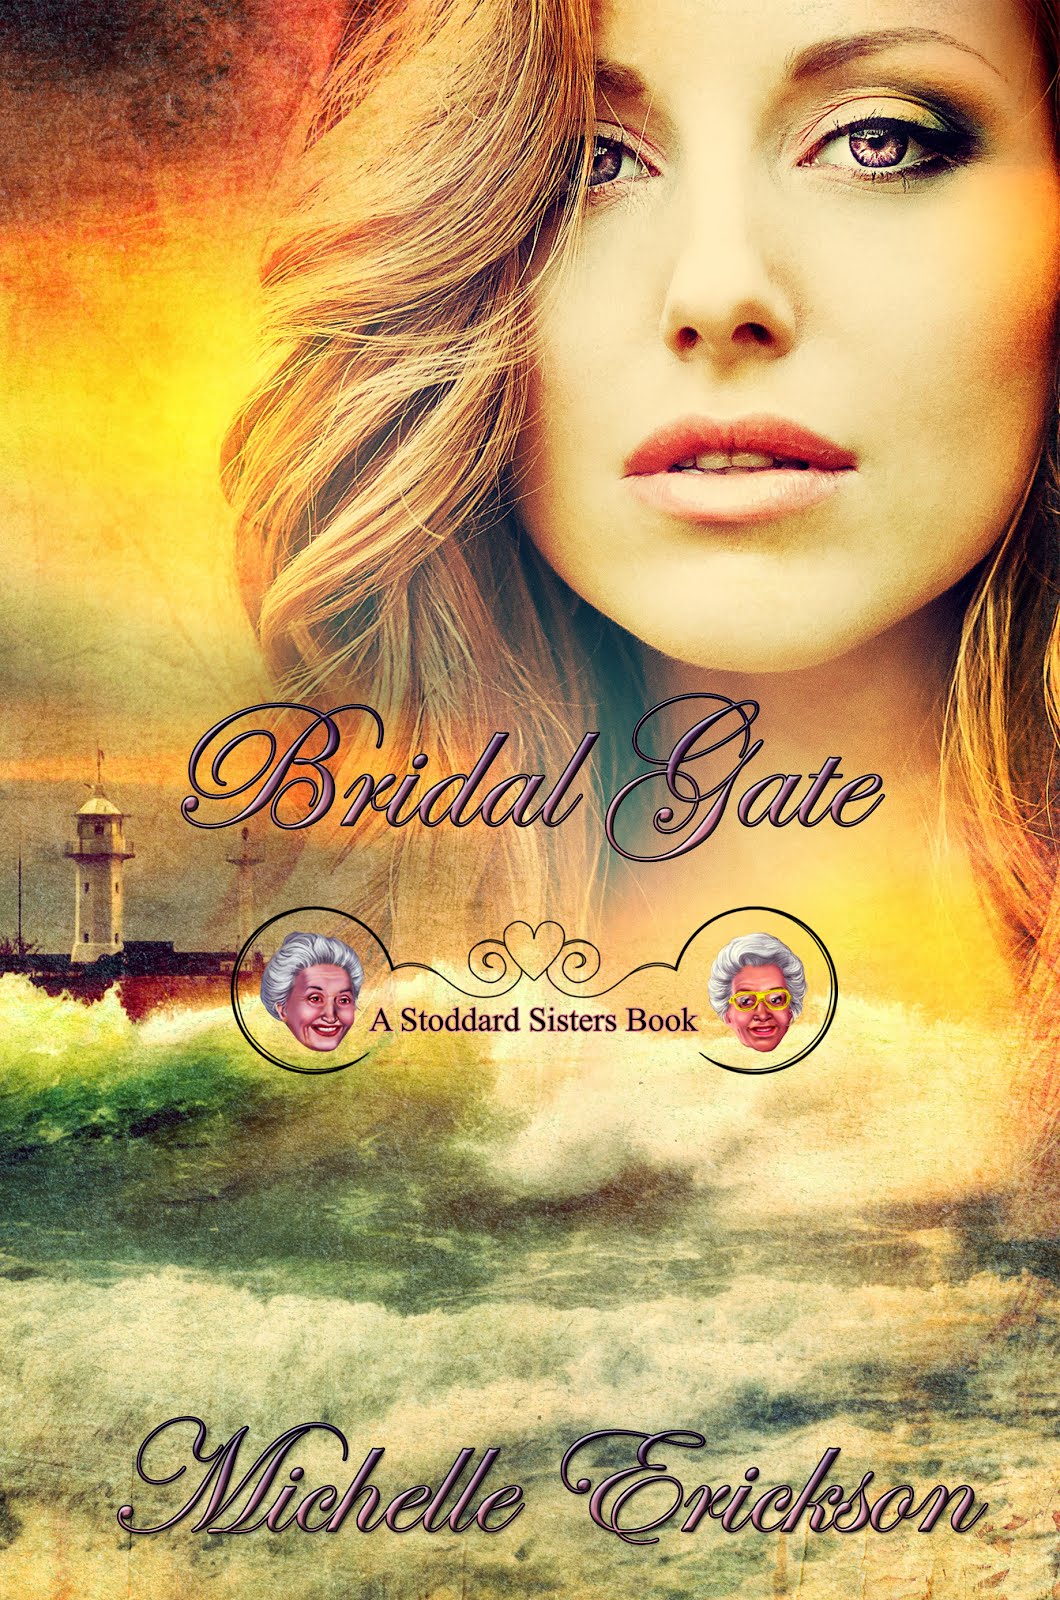 Bridal Gate: A Stoddard Sisters Book